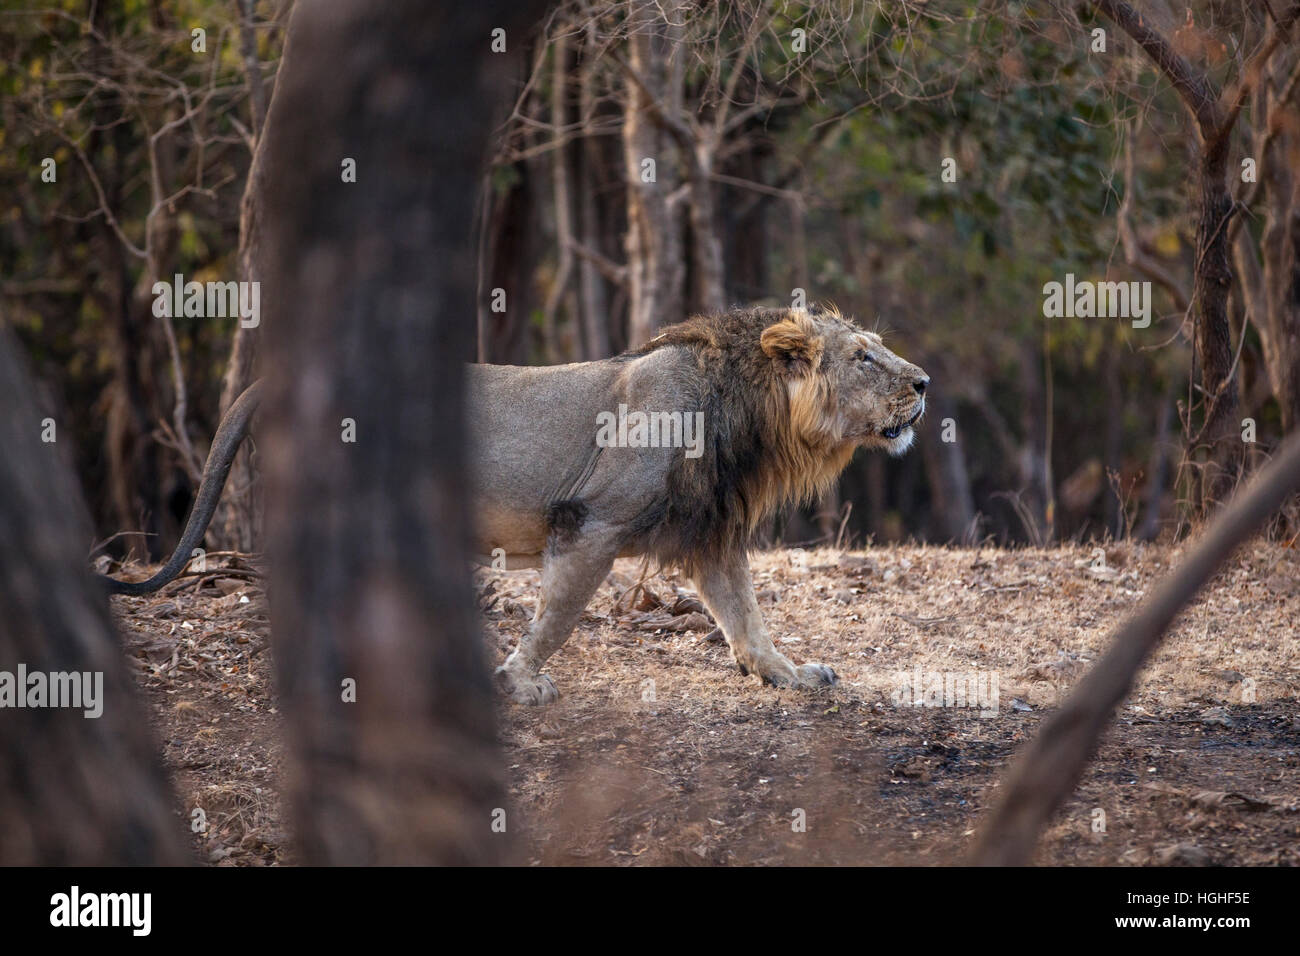 Leone asiatico (Panthera leo persica) in GIR forest, Gujarat, India. Foto Stock